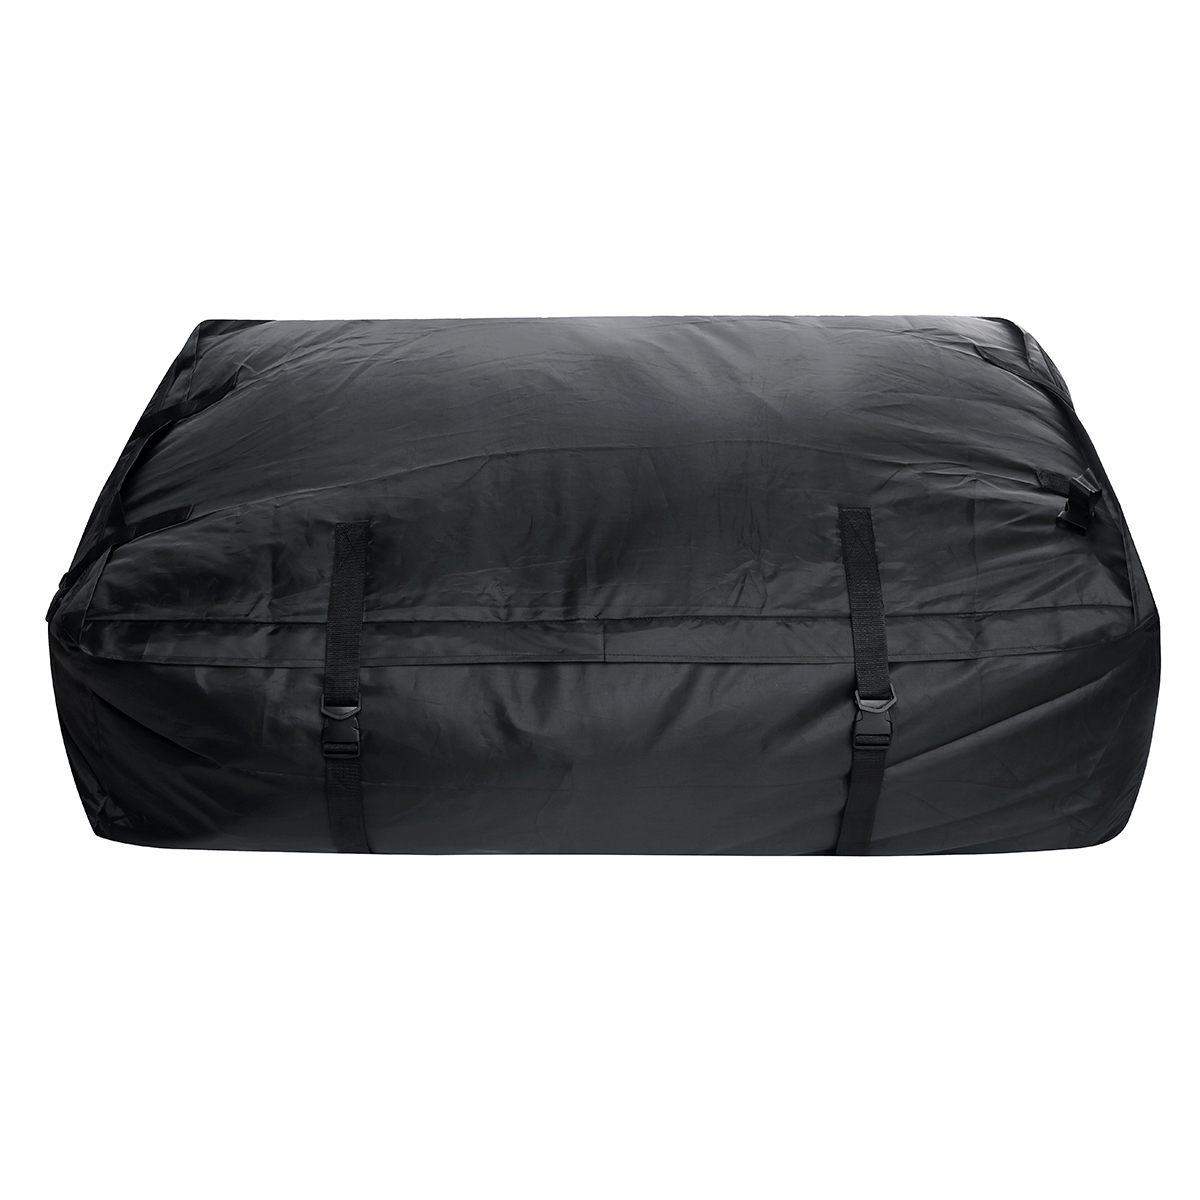 Oxford-Cloth-Car-Roof-Bag-Travel-Car-Top-Rack-Bag-Waterproof-Luggage-Cargo-Carrier-Bag-Outdoor-Campi-1762473-3